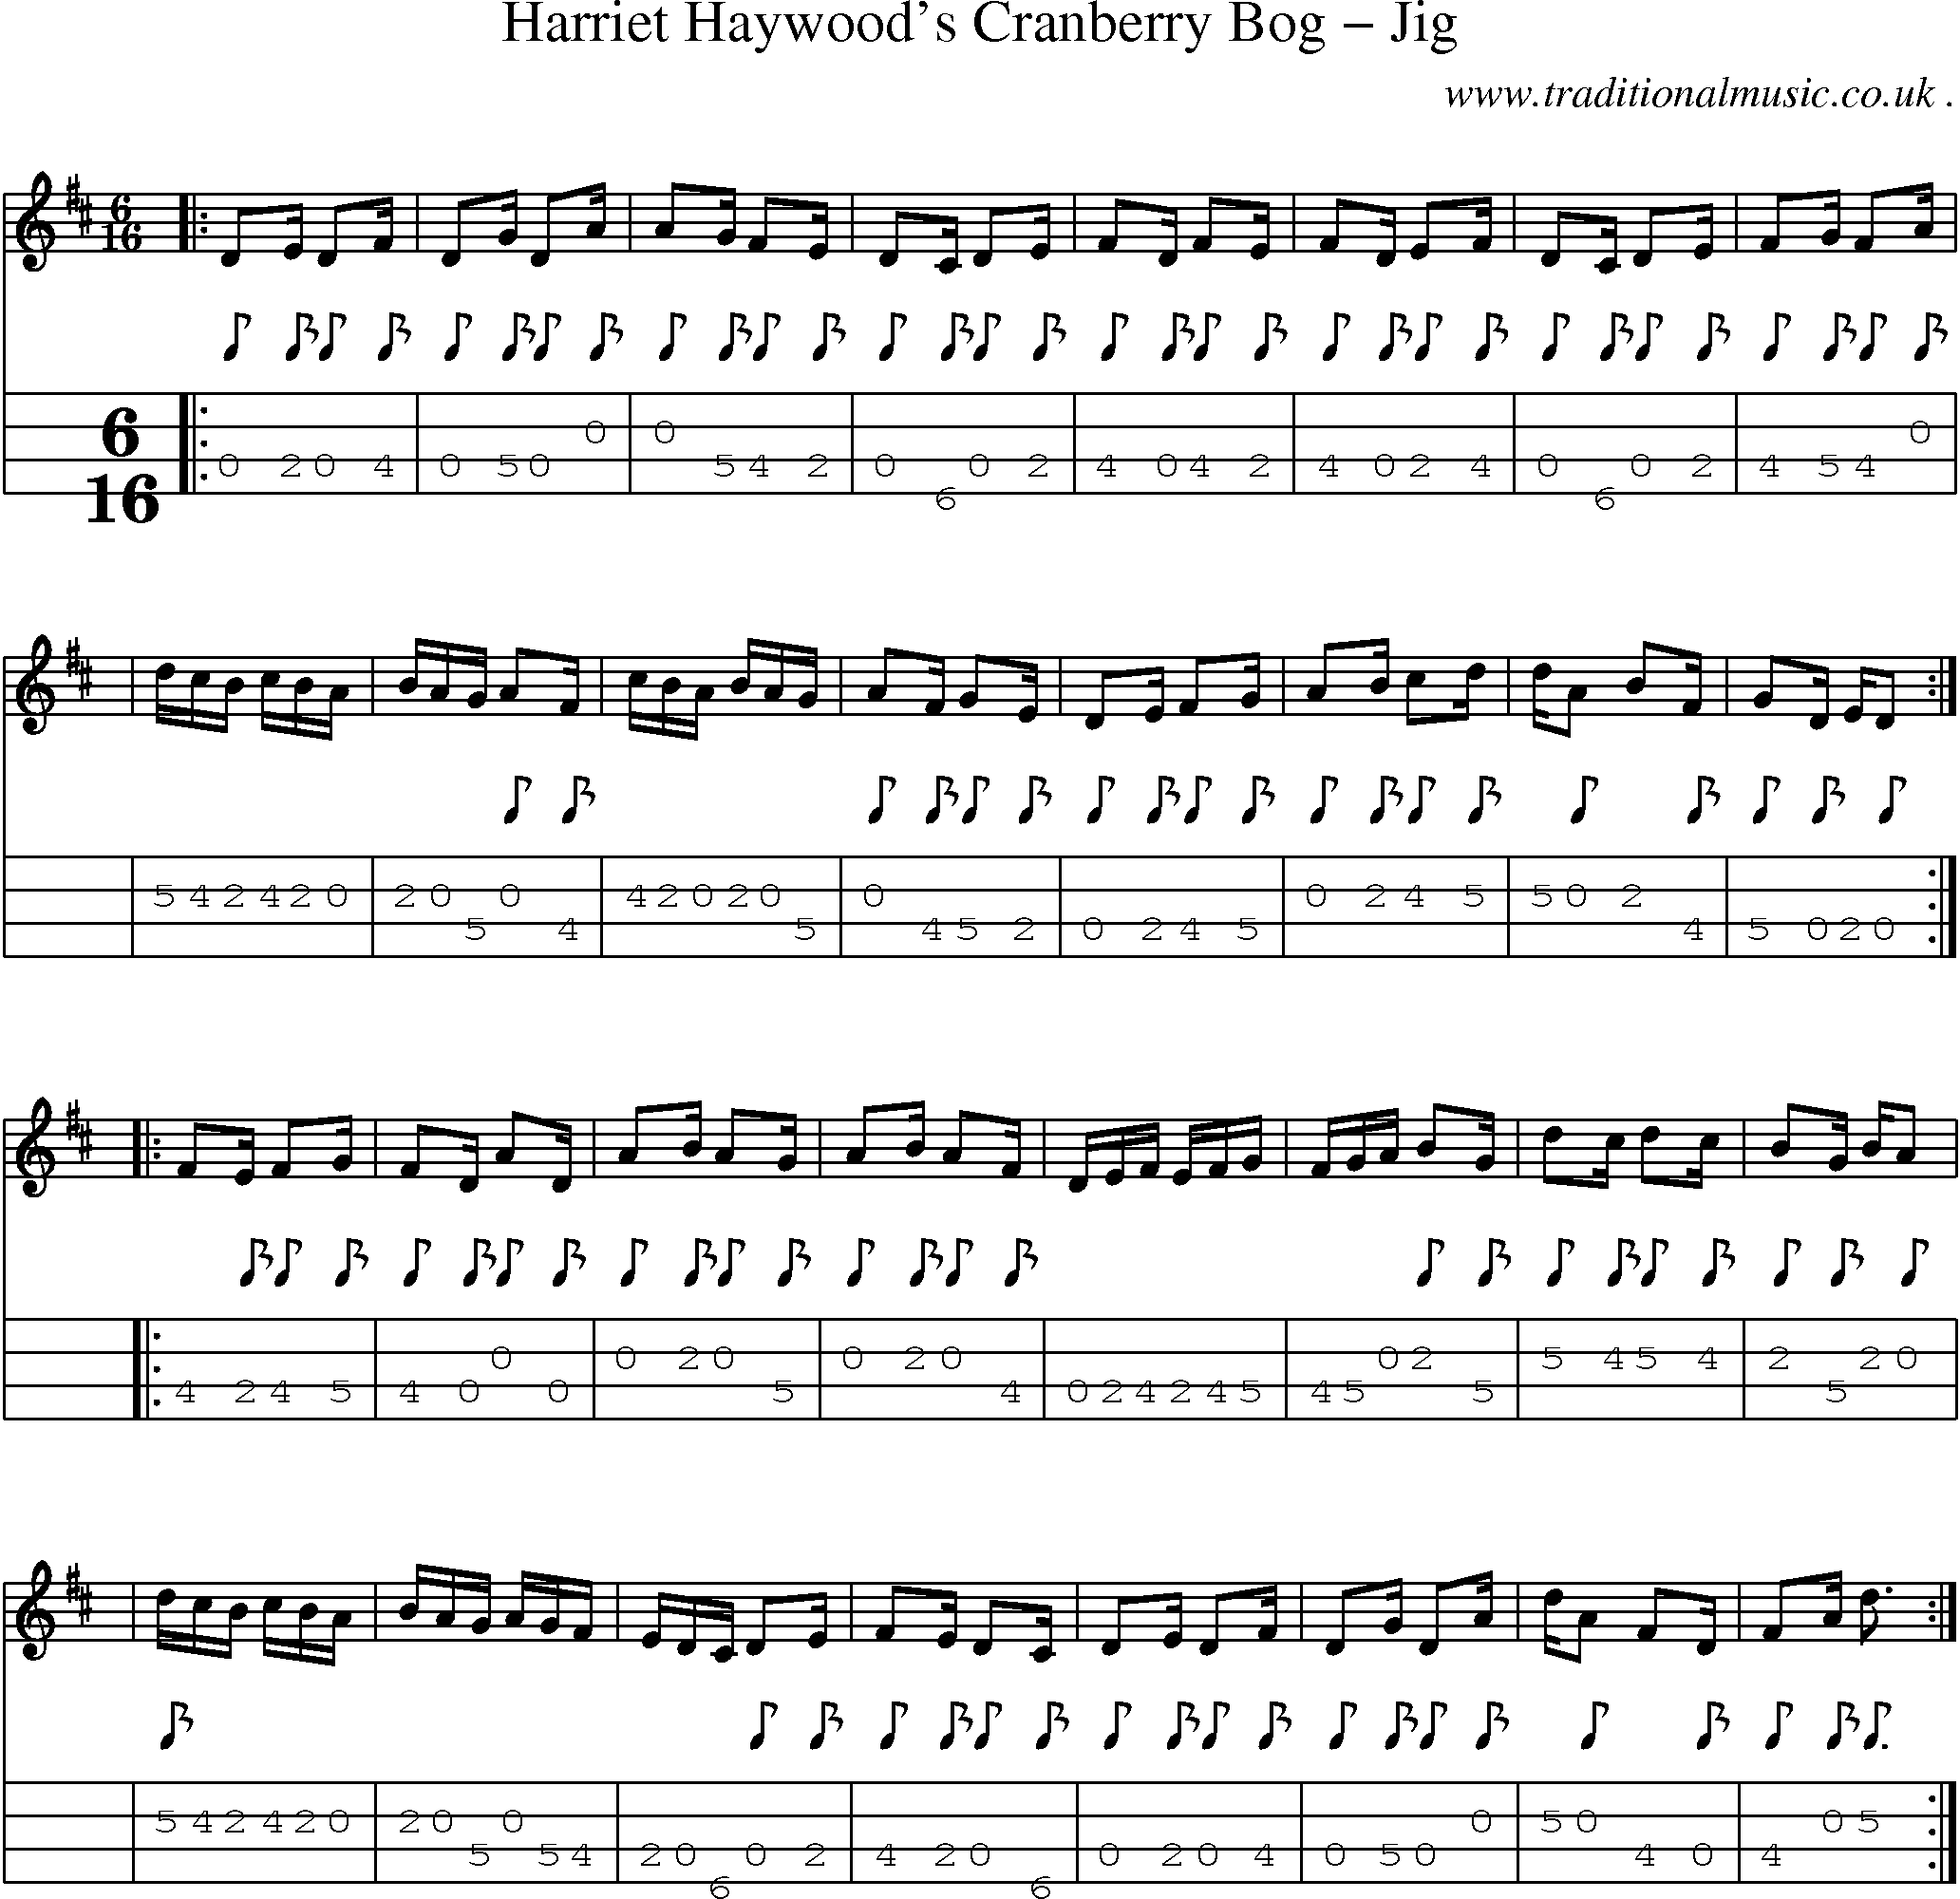 Sheet-music  score, Chords and Mandolin Tabs for Harriet Haywoods Cranberry Bog Jig